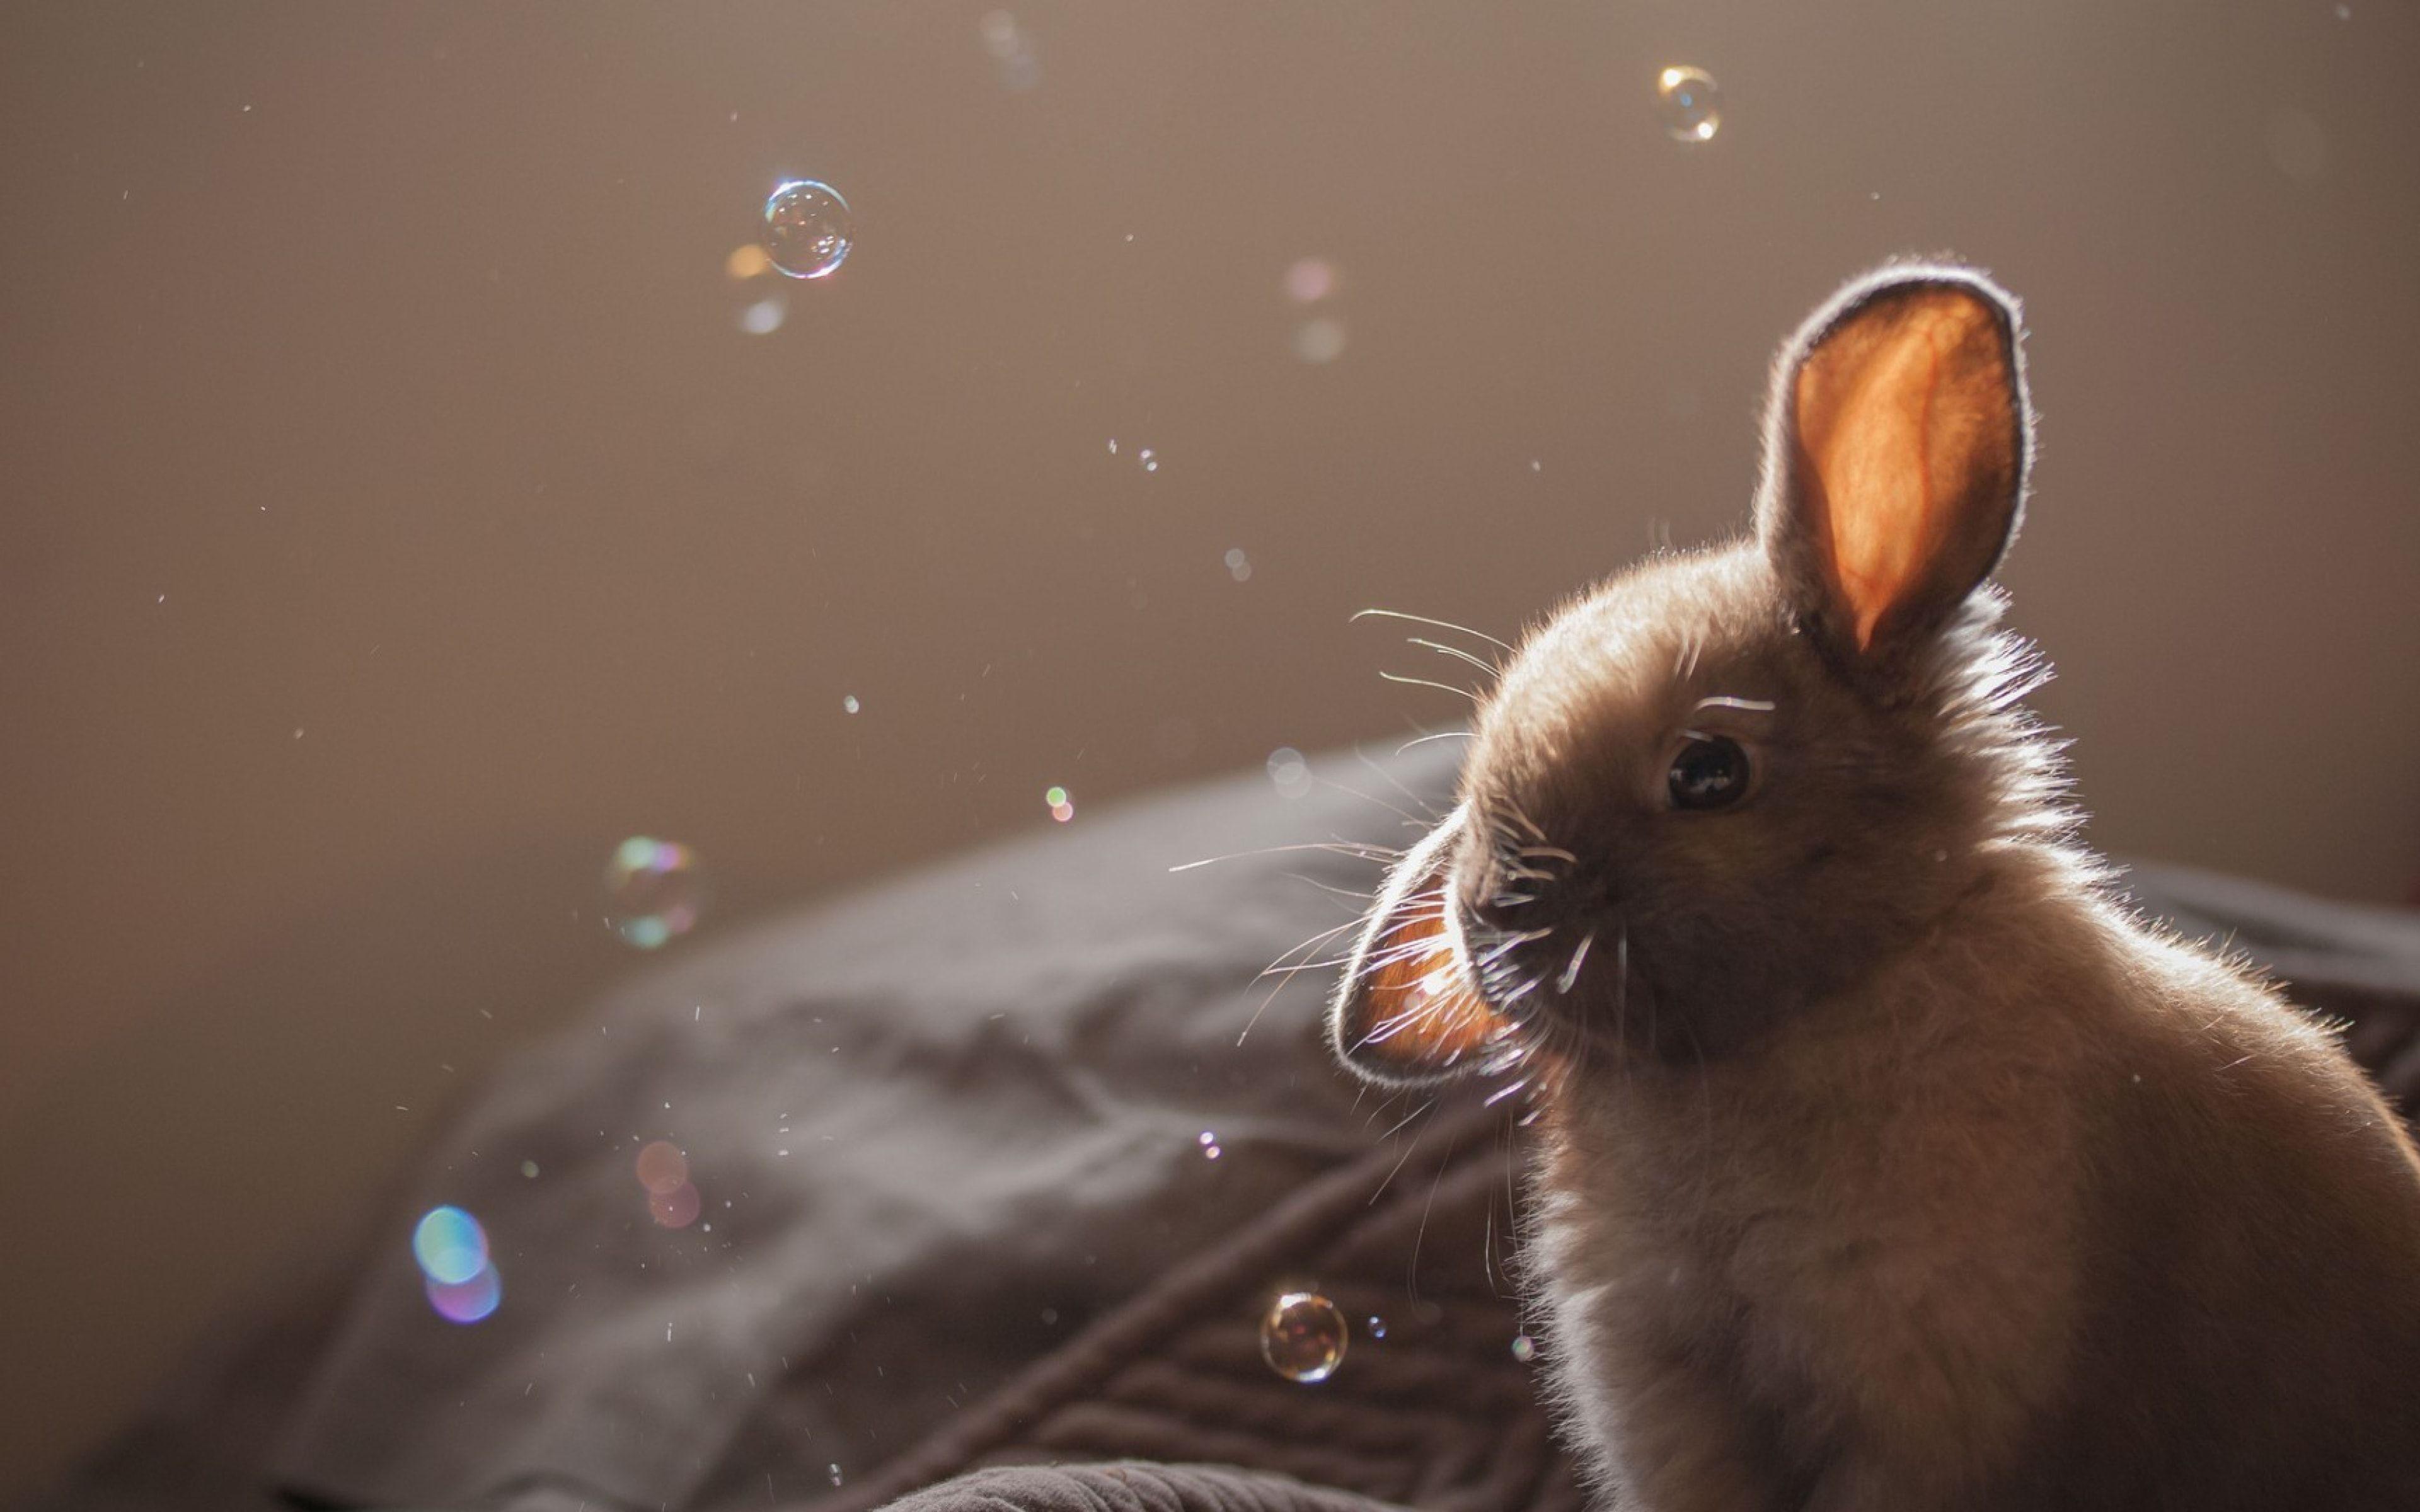 Cute rabbit Wallpaper and Free